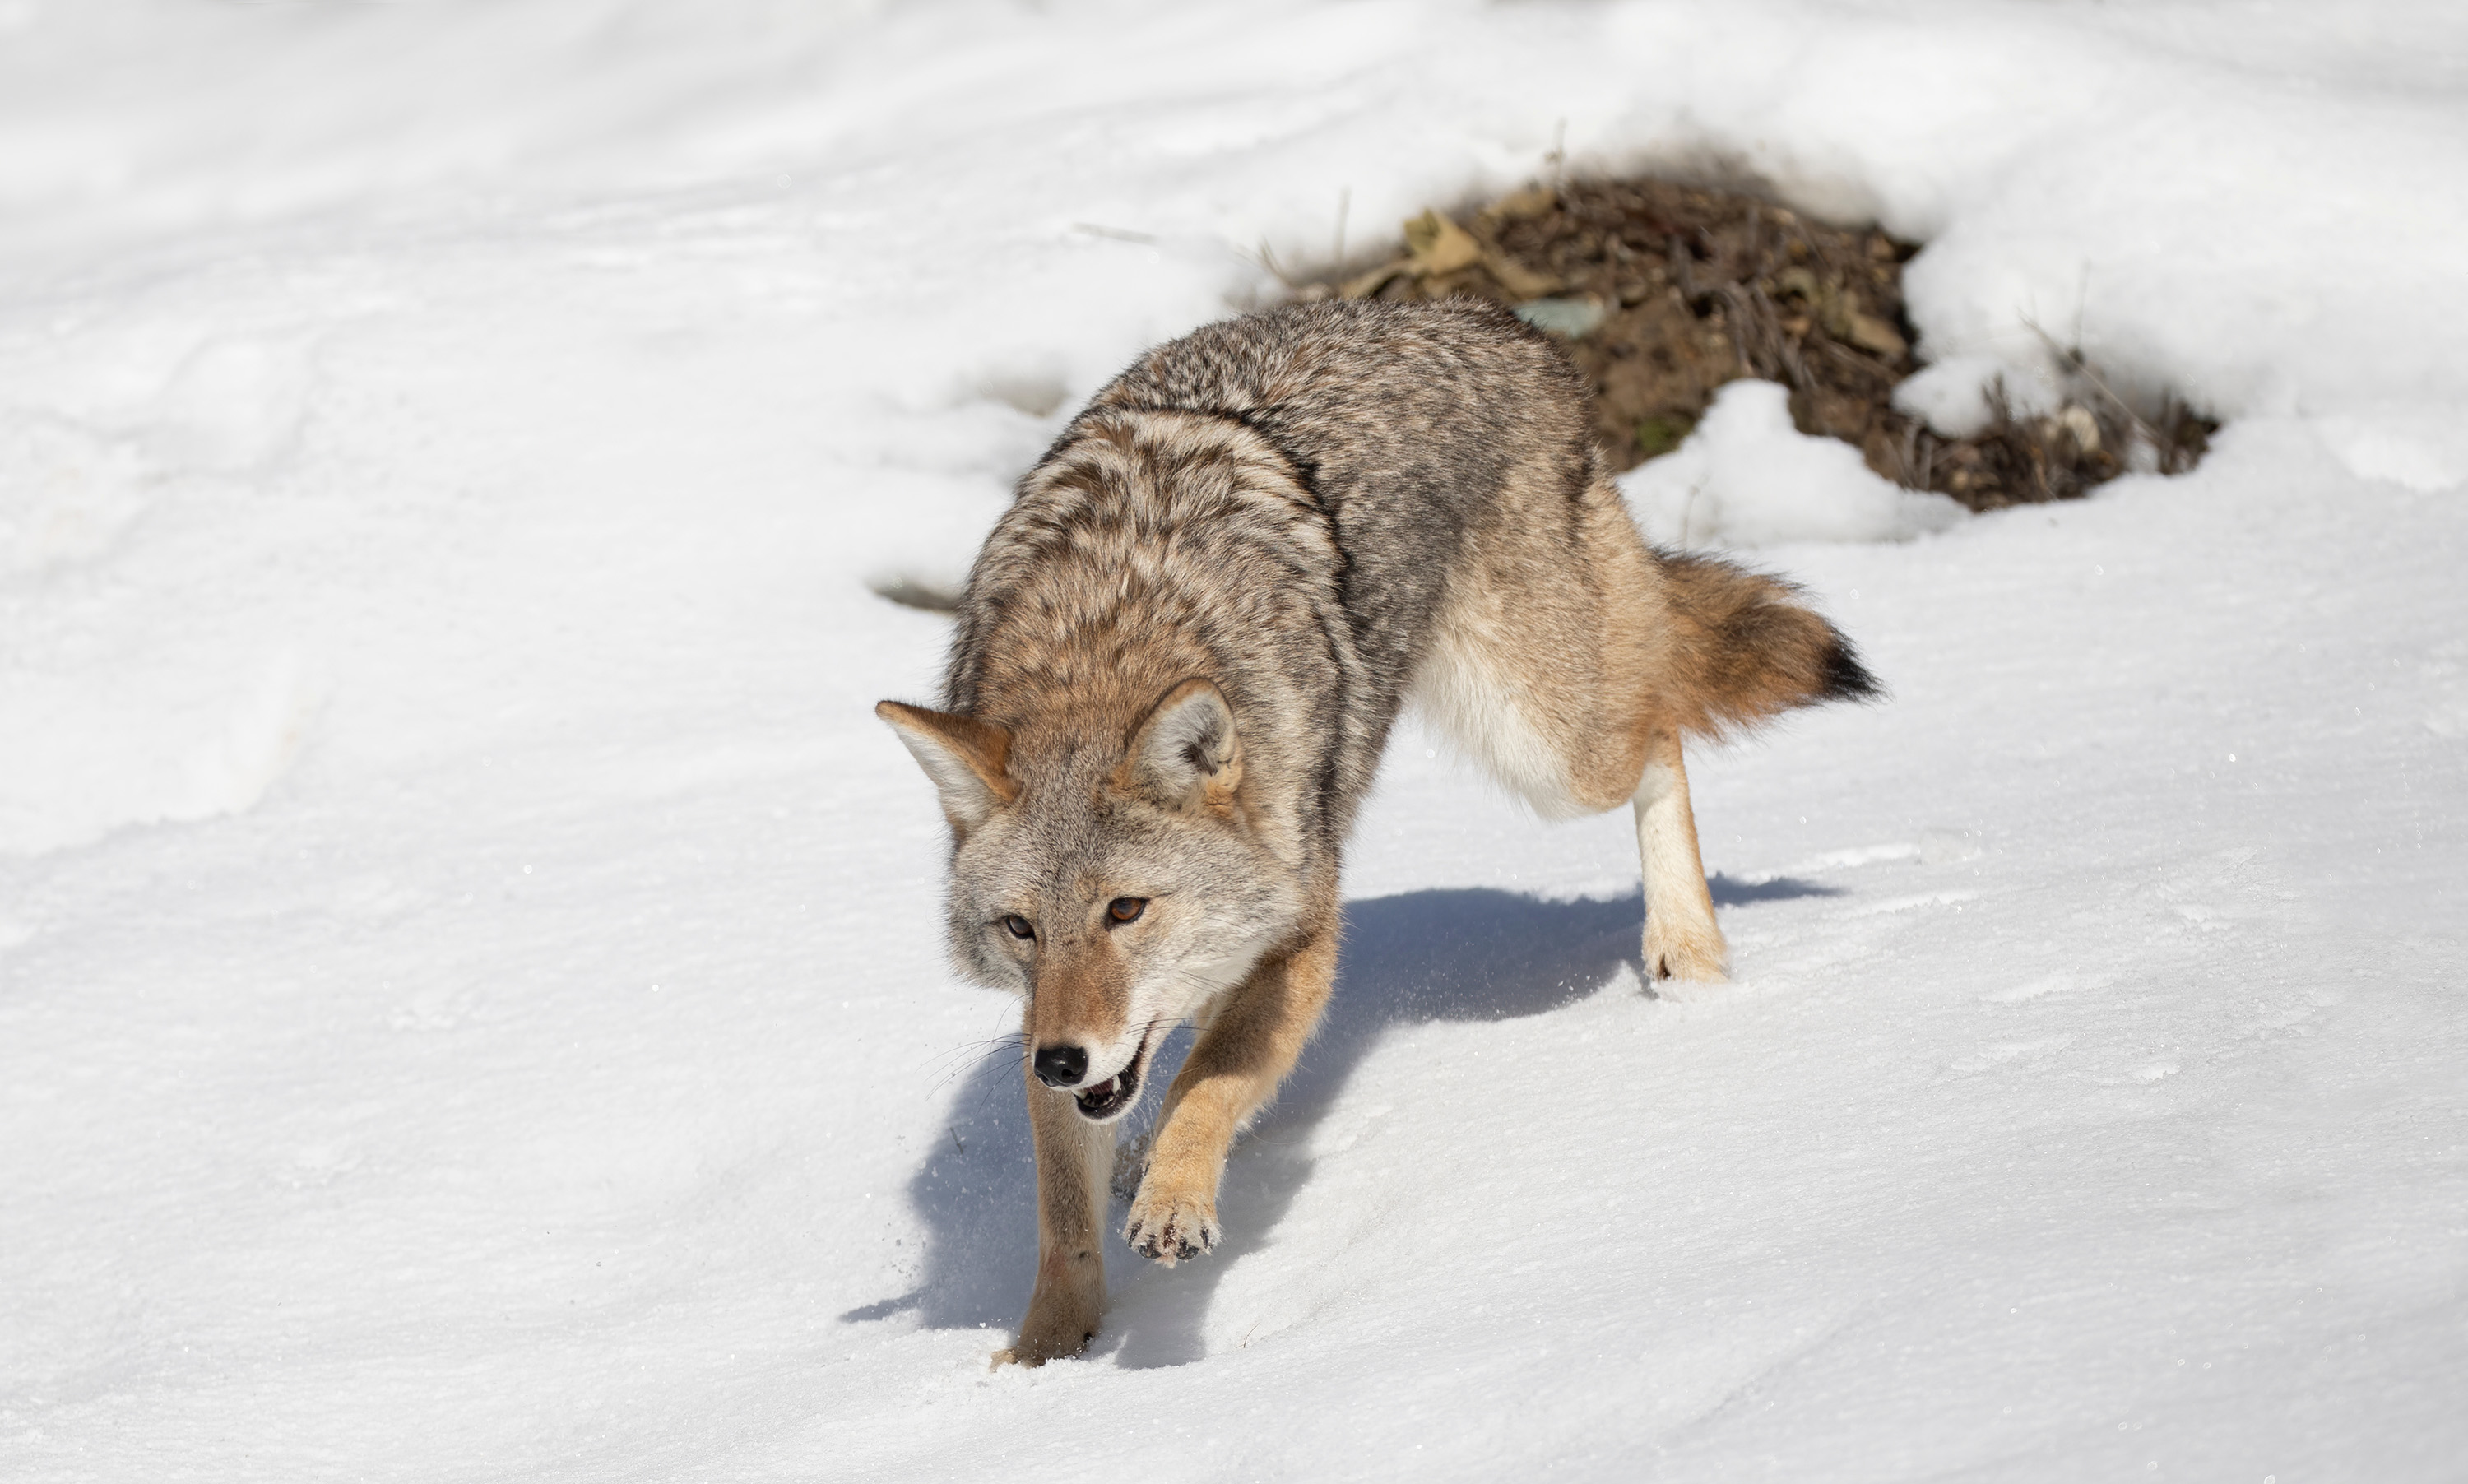 A coyote walking through snow.